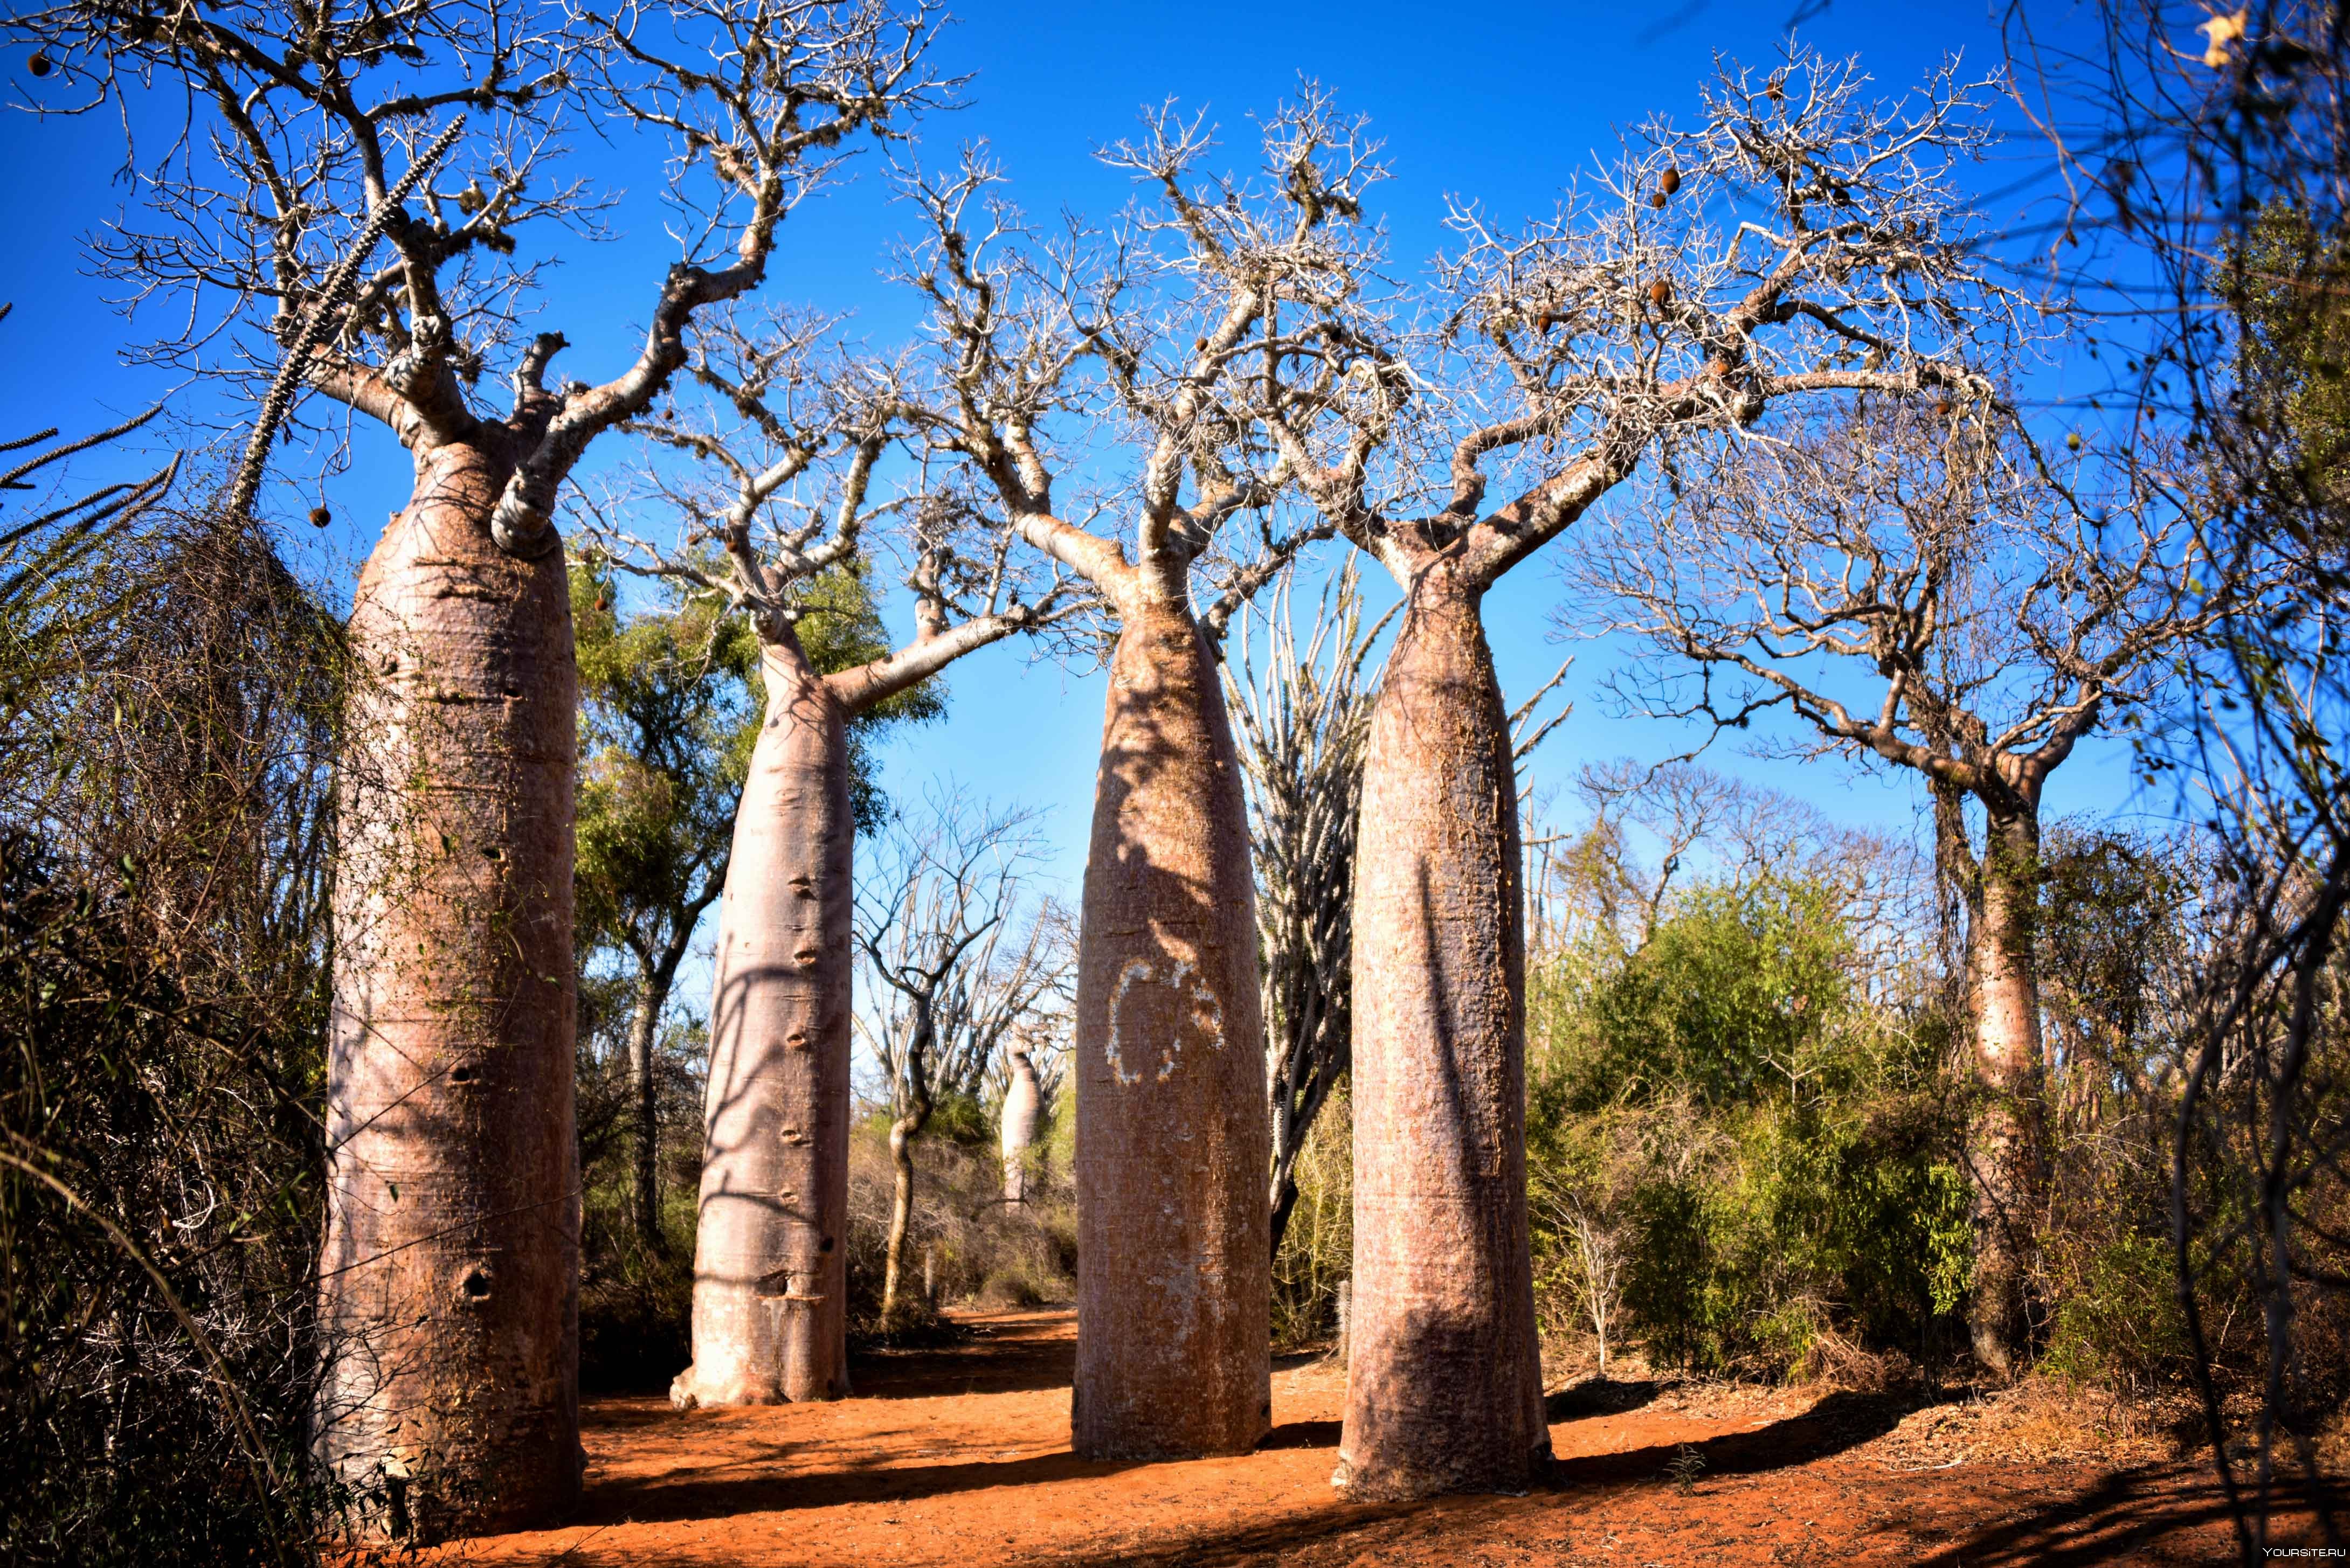 Ба баб. Аллея баобабов Мадагаскар. Мадагаскар дерево баобаб Мадагаскар. Проспект баобабов Мадагаскар.